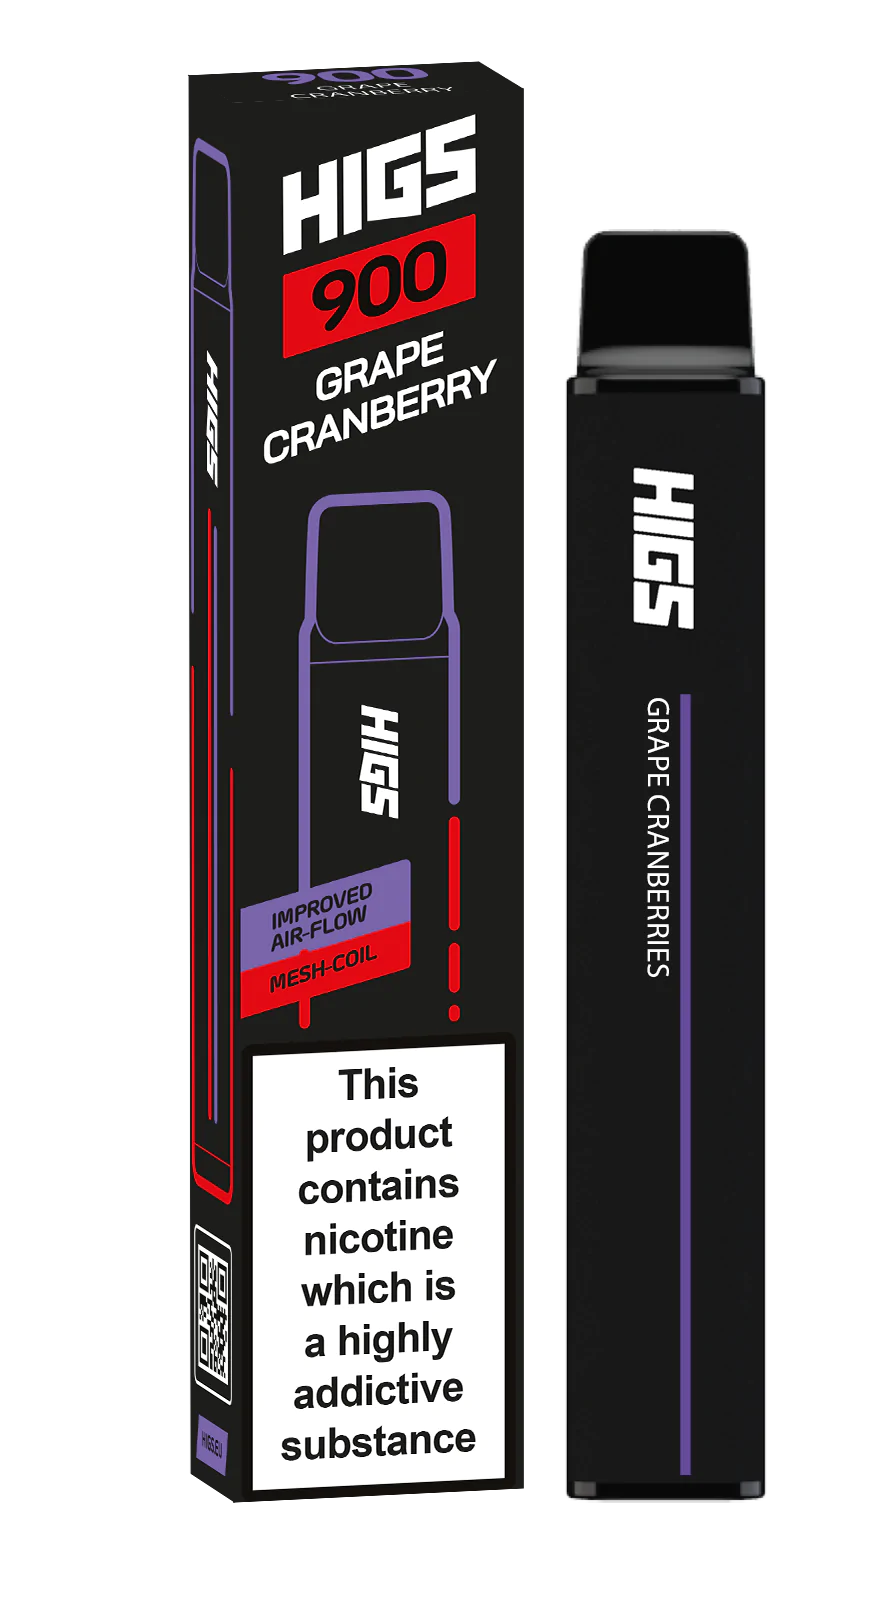 HIGS XL Grape Cranberries